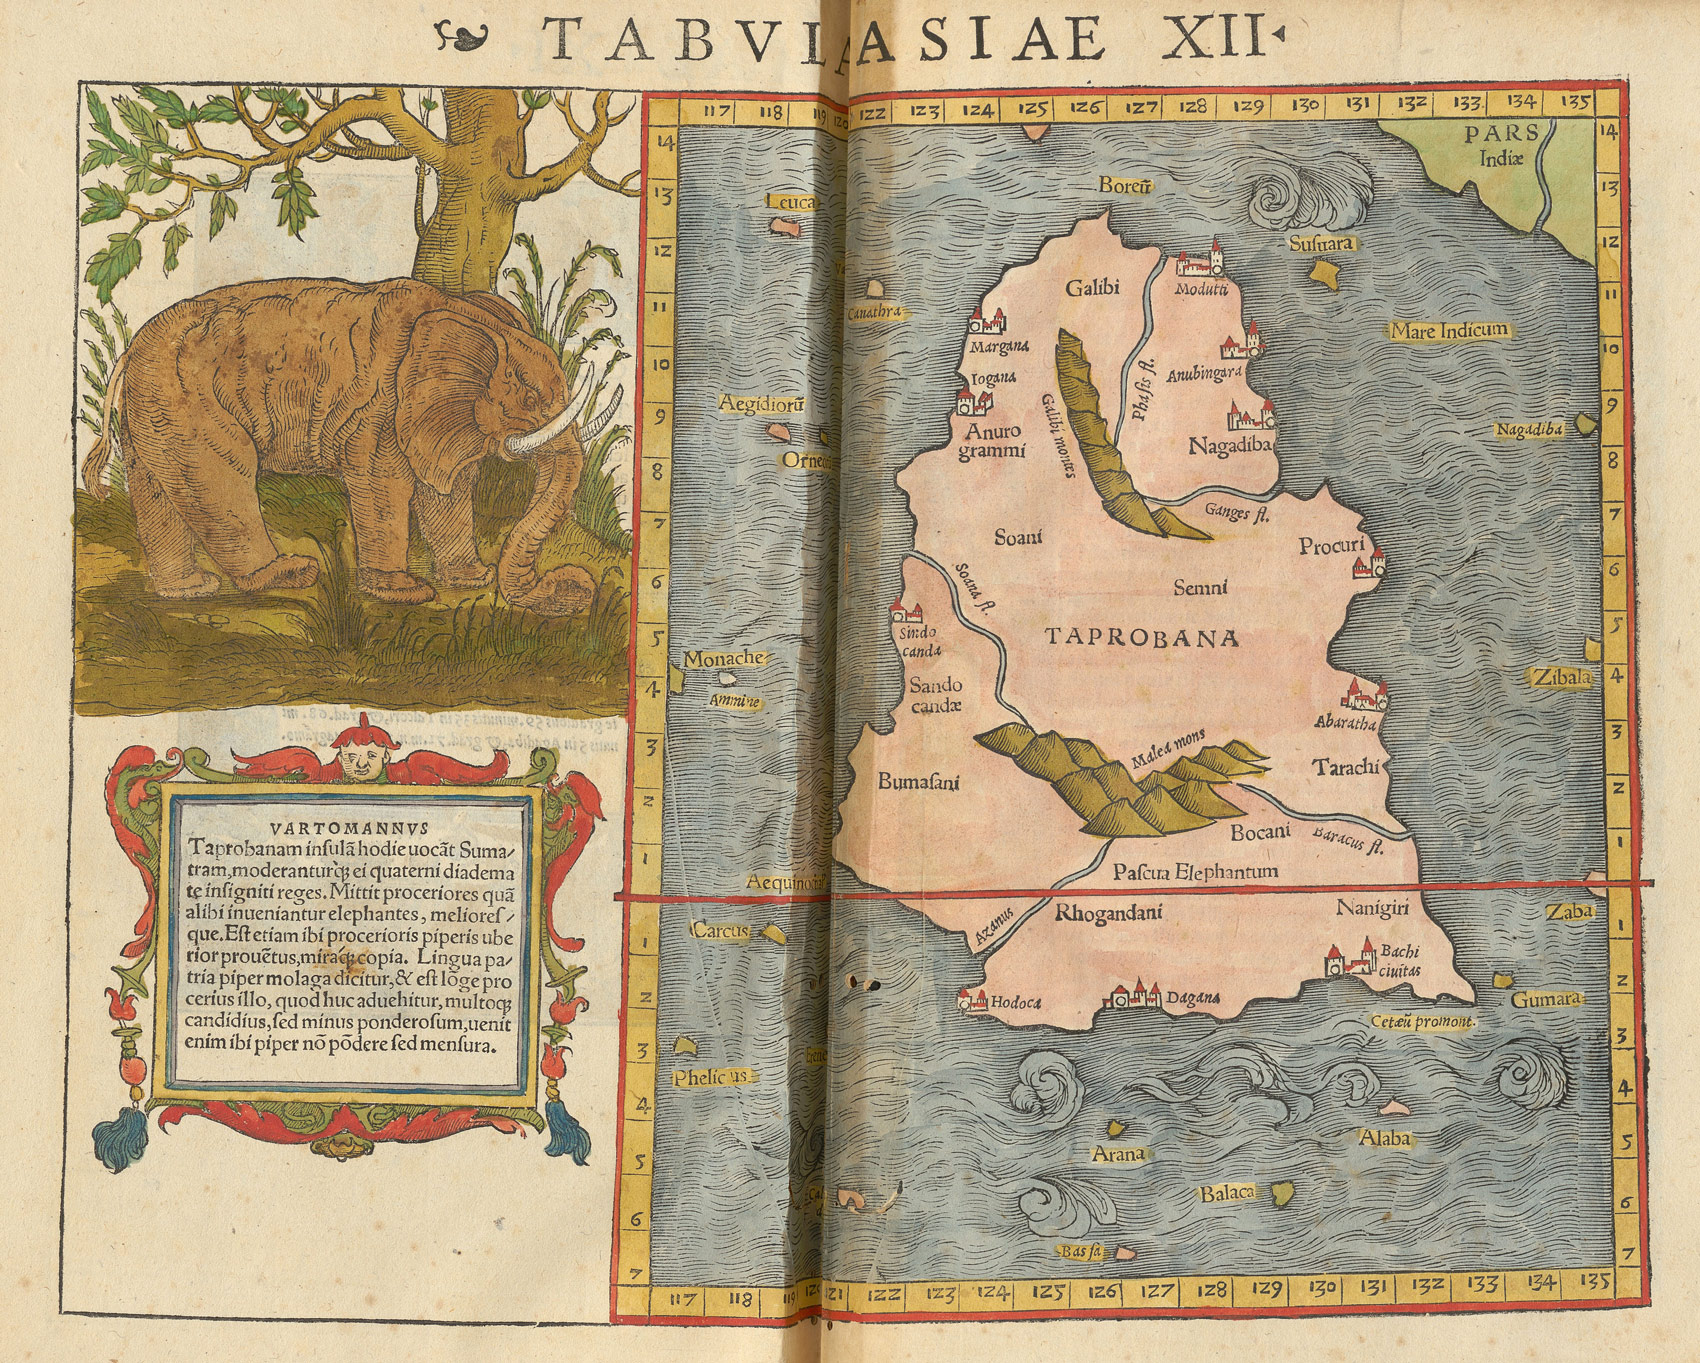 Auf der «Tabula Asiae XII» wird Taprobana in Sumatra identifiziert, Karte in: Geographia universalis, 1540, S. 299. Zentralbibliothek Zürich, T 112,2.